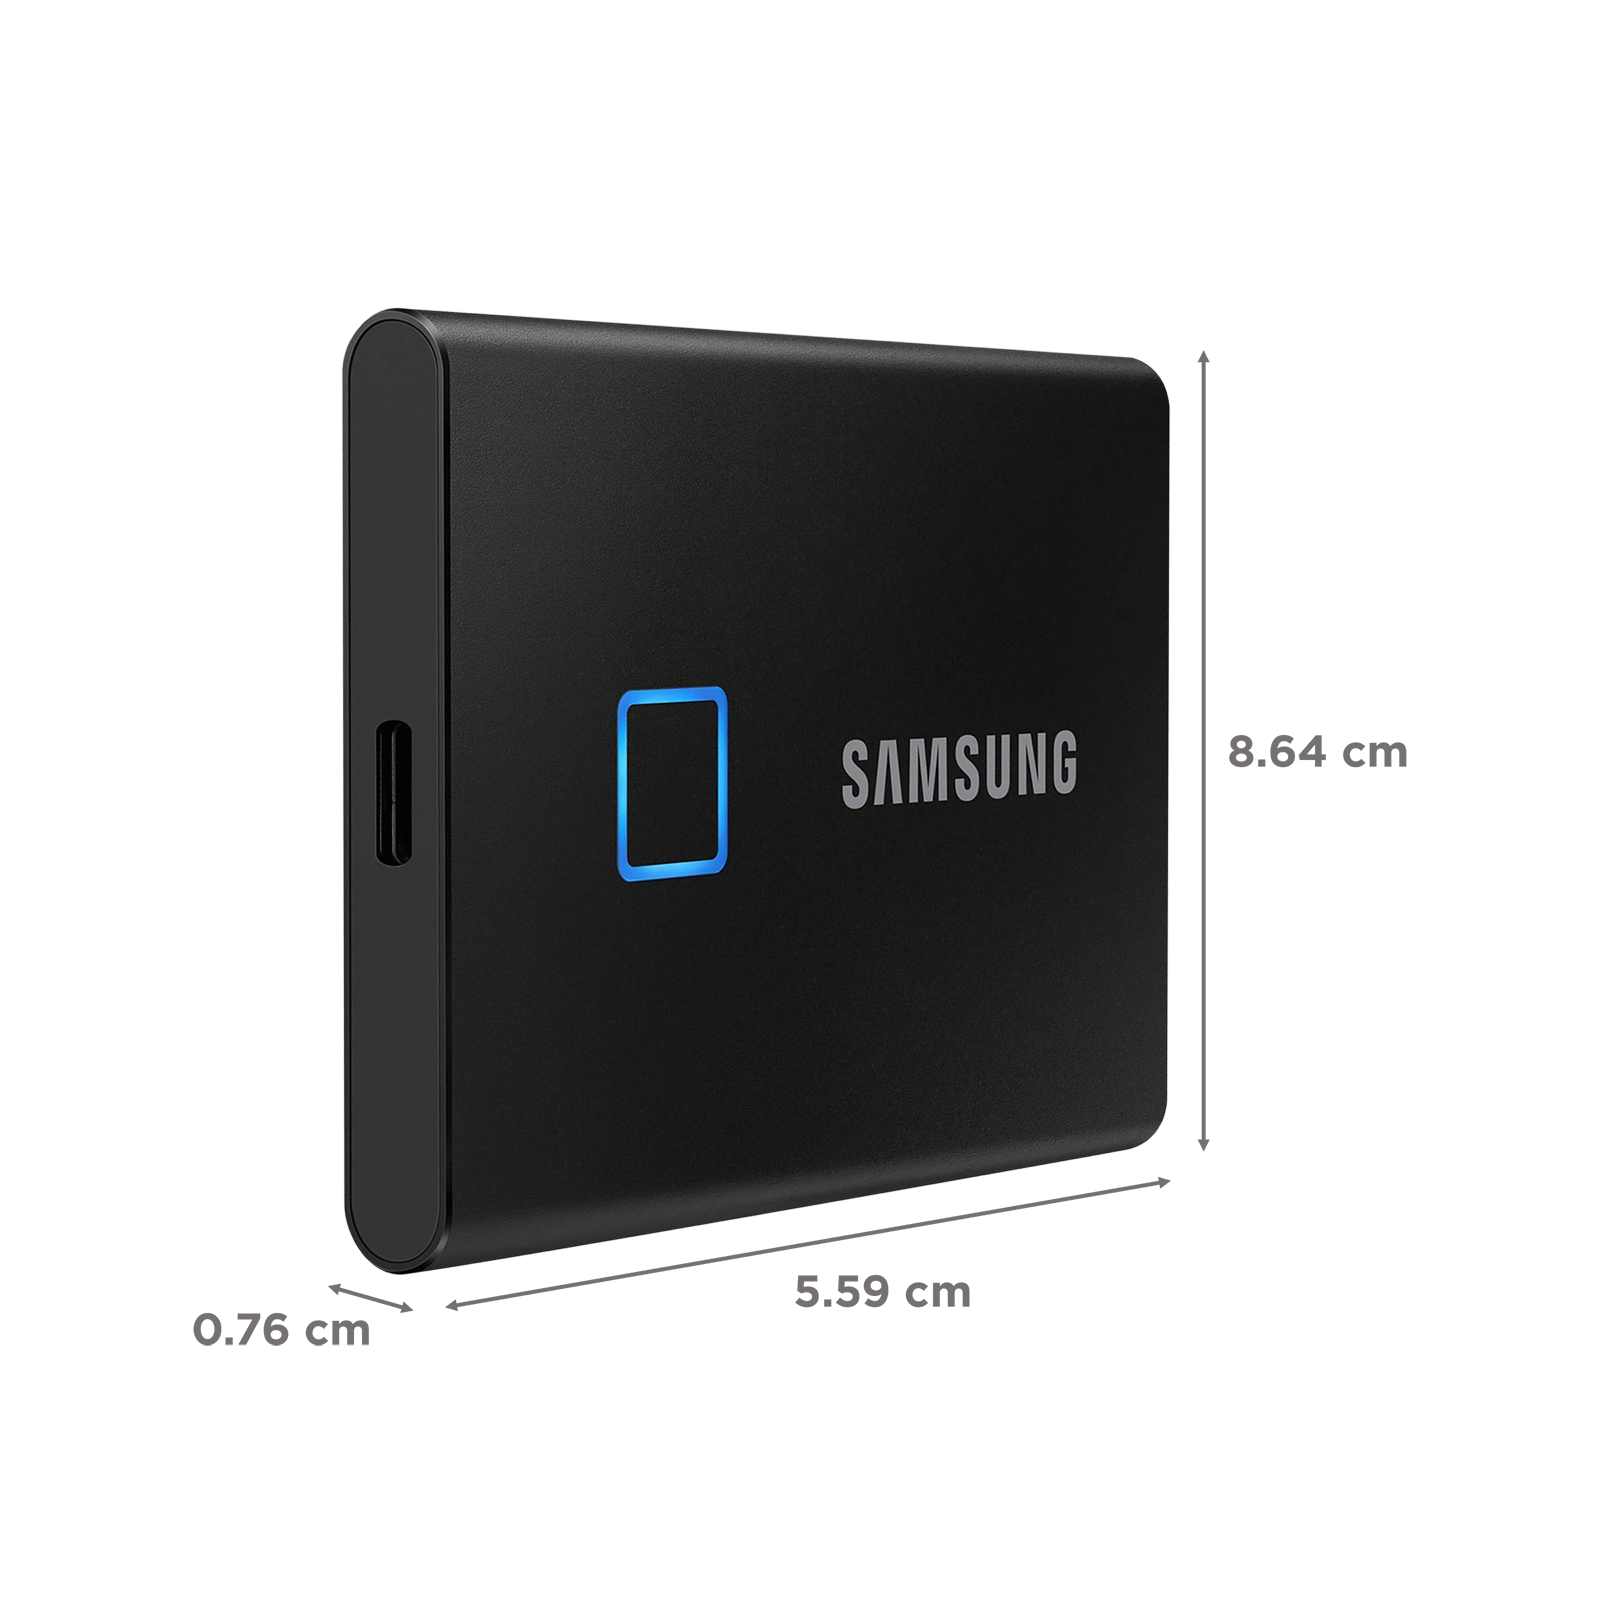 Samsung T7 Touch Portable SSD - 1.0 TB (Black) - MU-PC1T0K/WW 